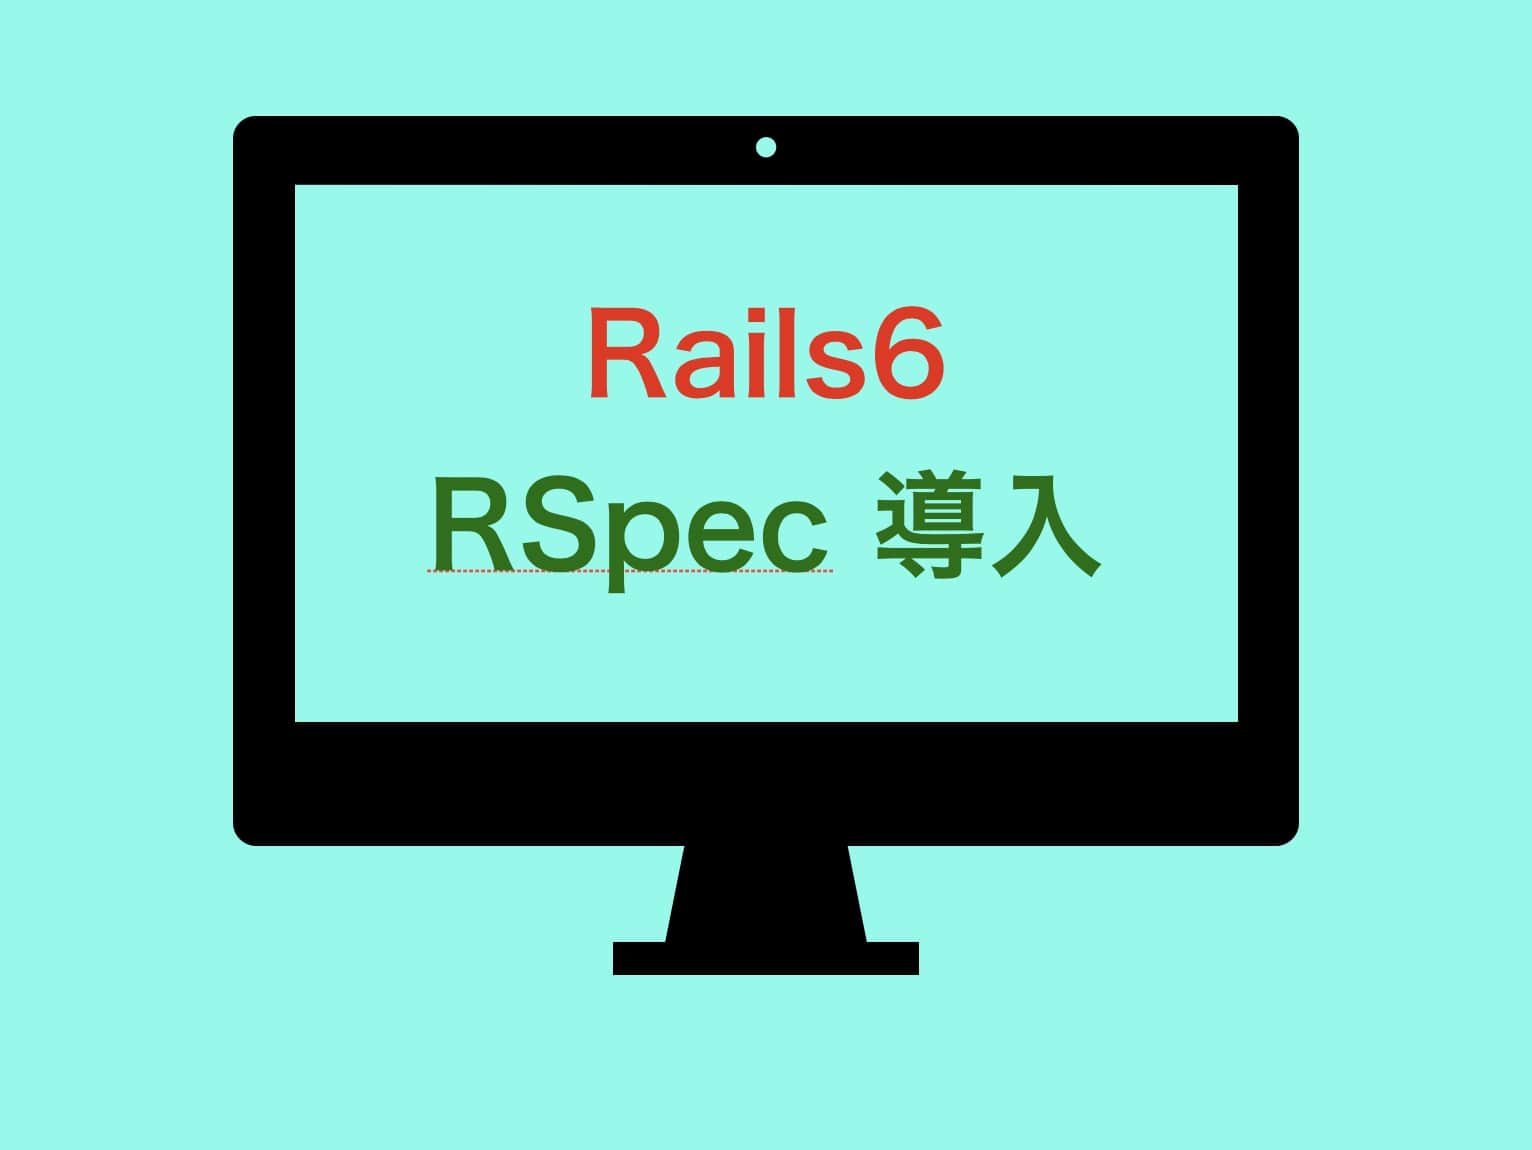 Rspec入門 #1】Rspecの導入から動作確認までを徹底解説【RSpec 入門】 | みやちゃのブログ